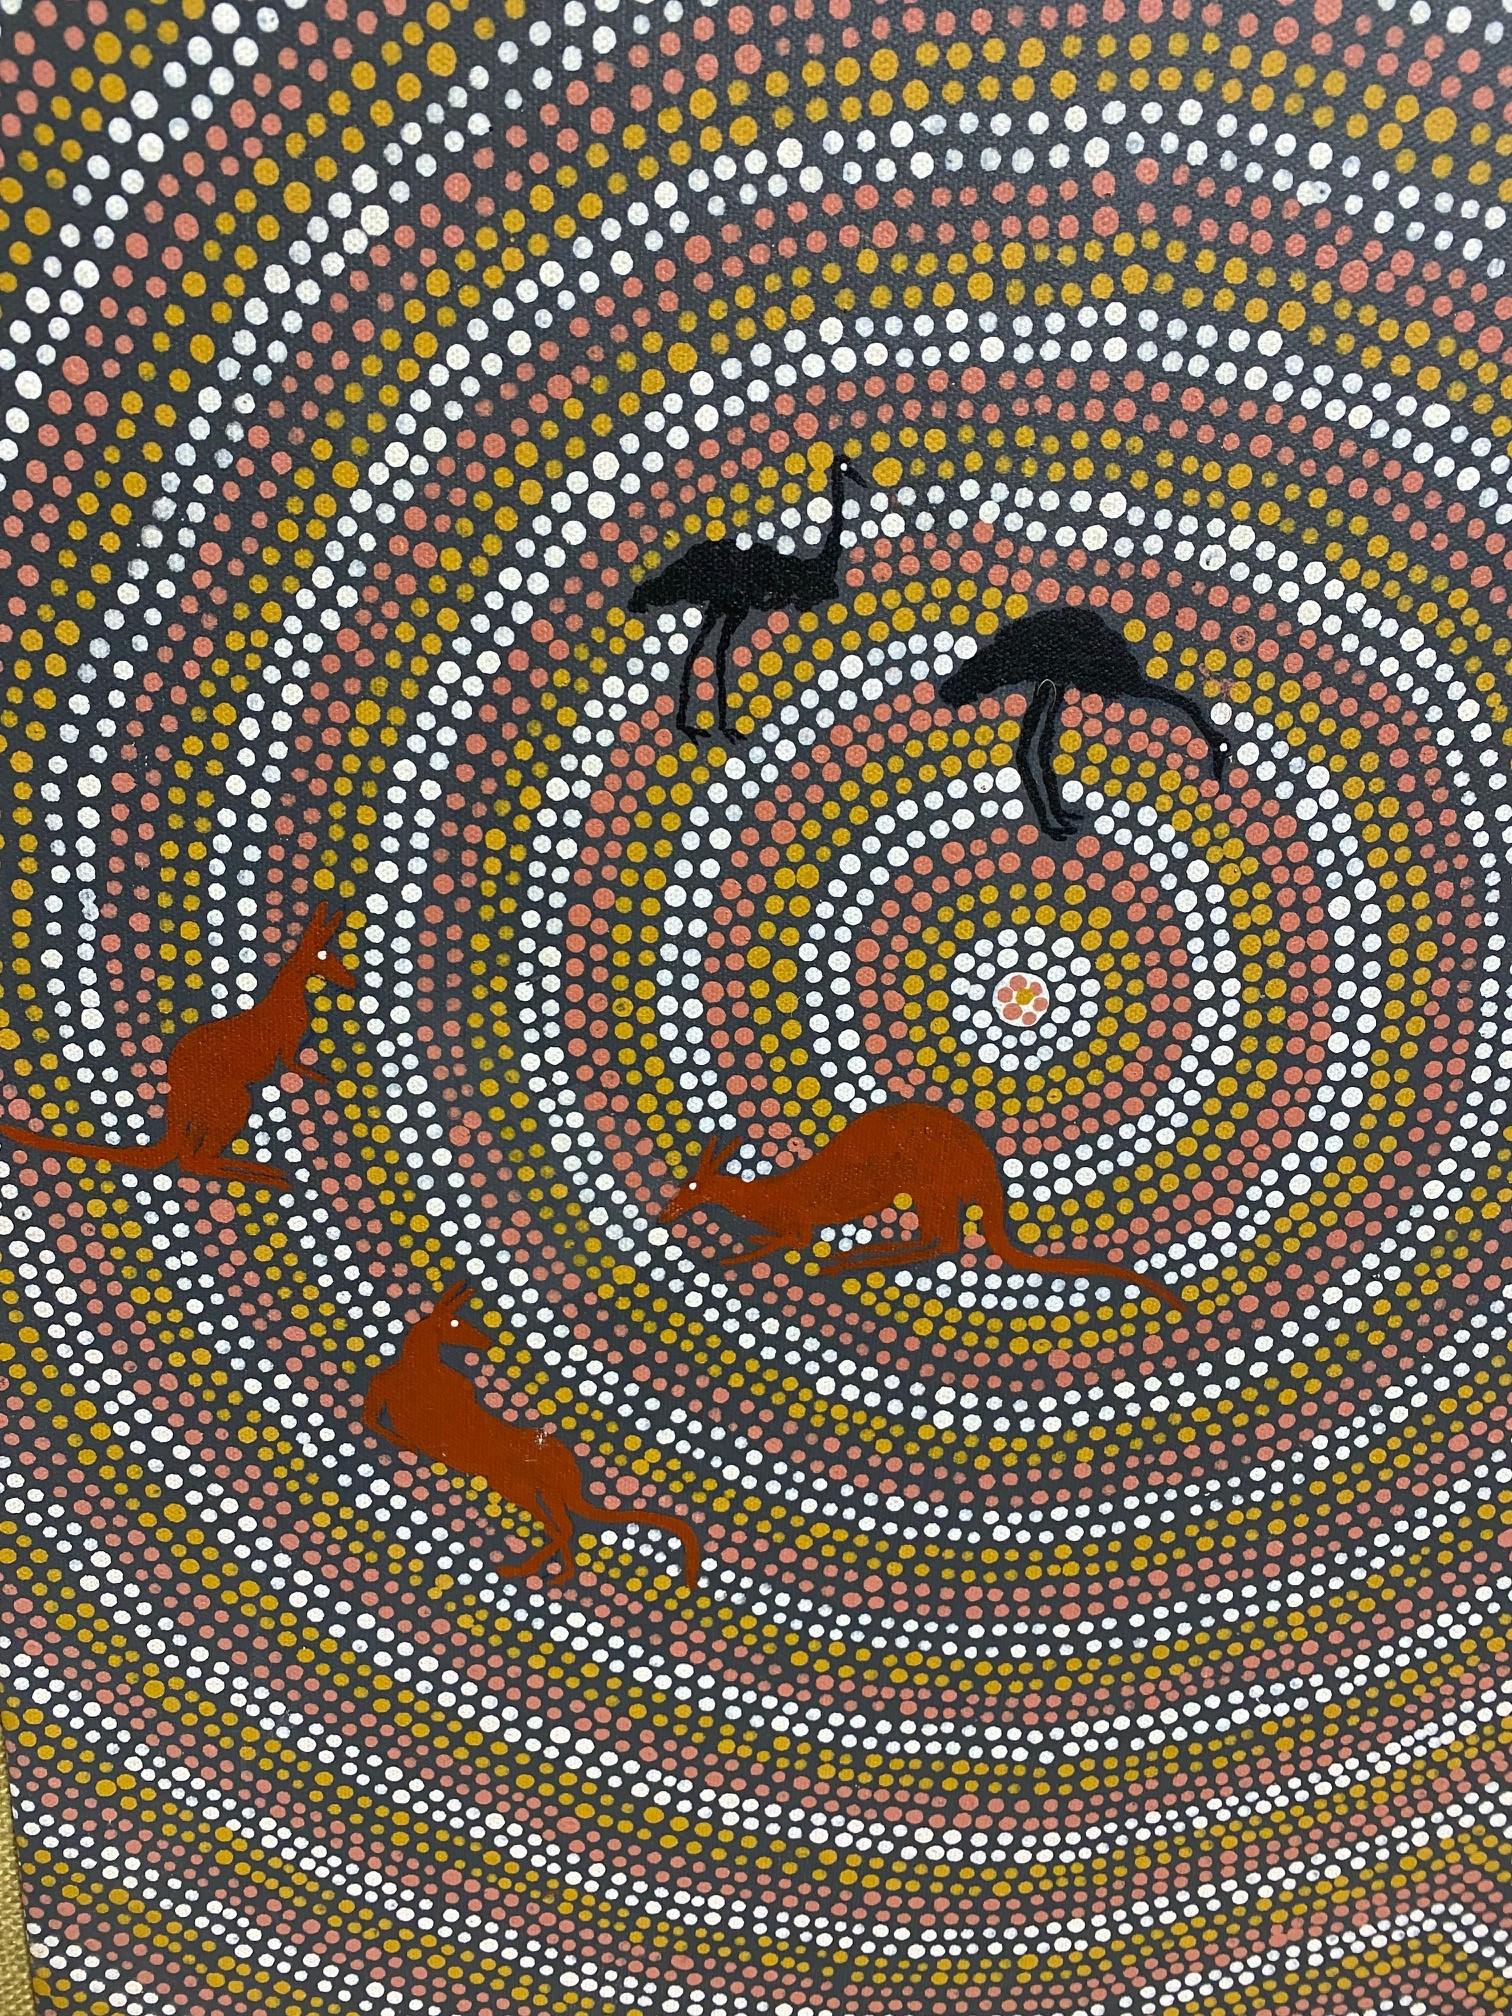 Toile Art aborigène australien Barbara Charles Napaltjarri - Peinture de chasse de rêve en vente